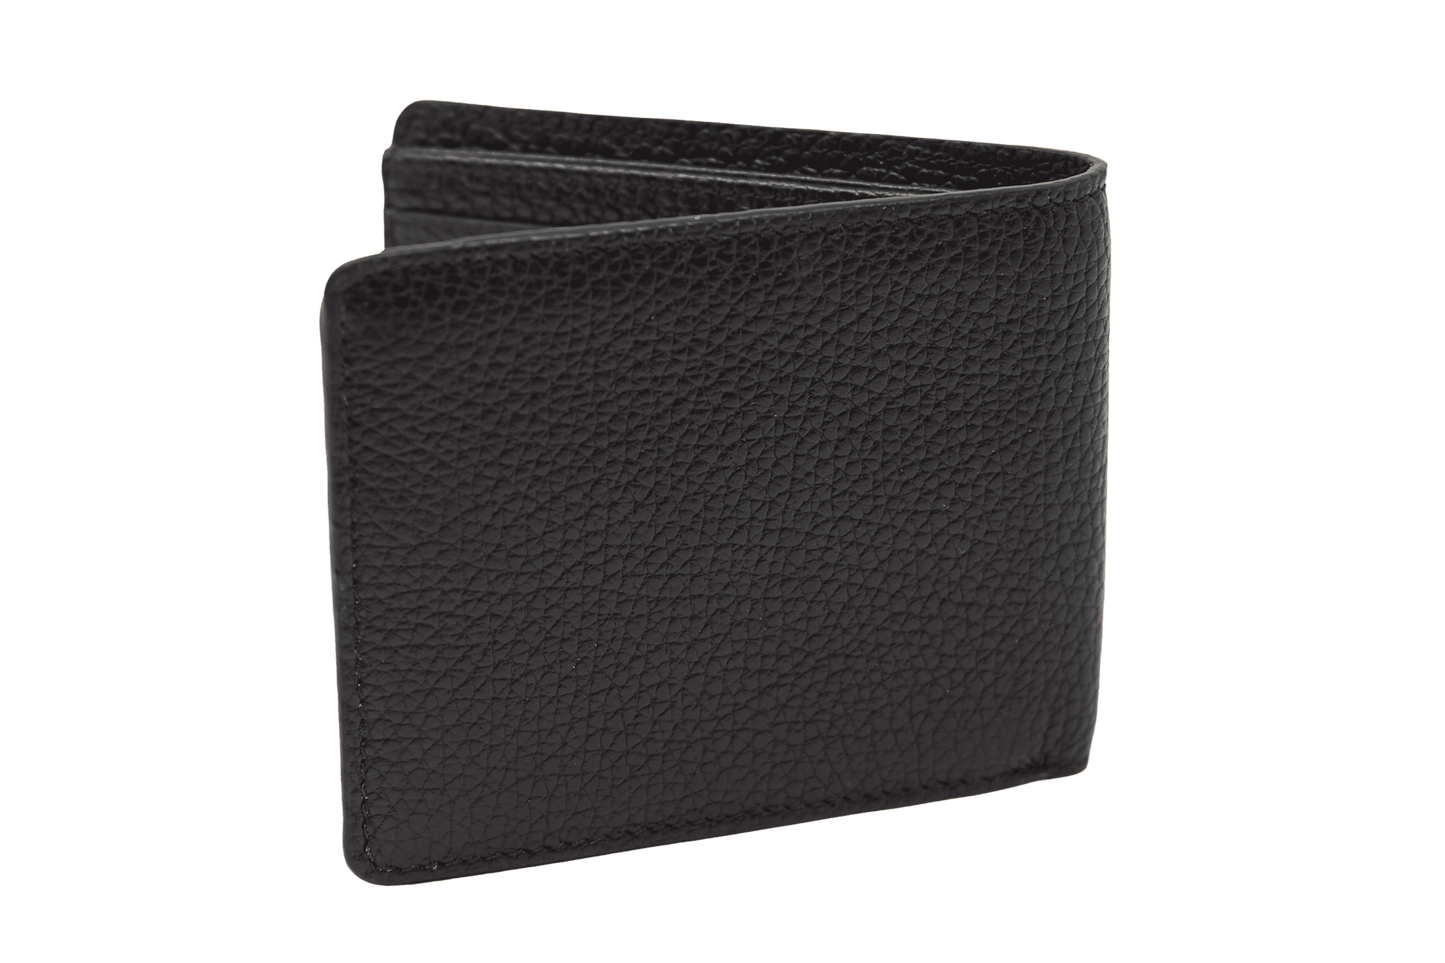 Blacksand wallet